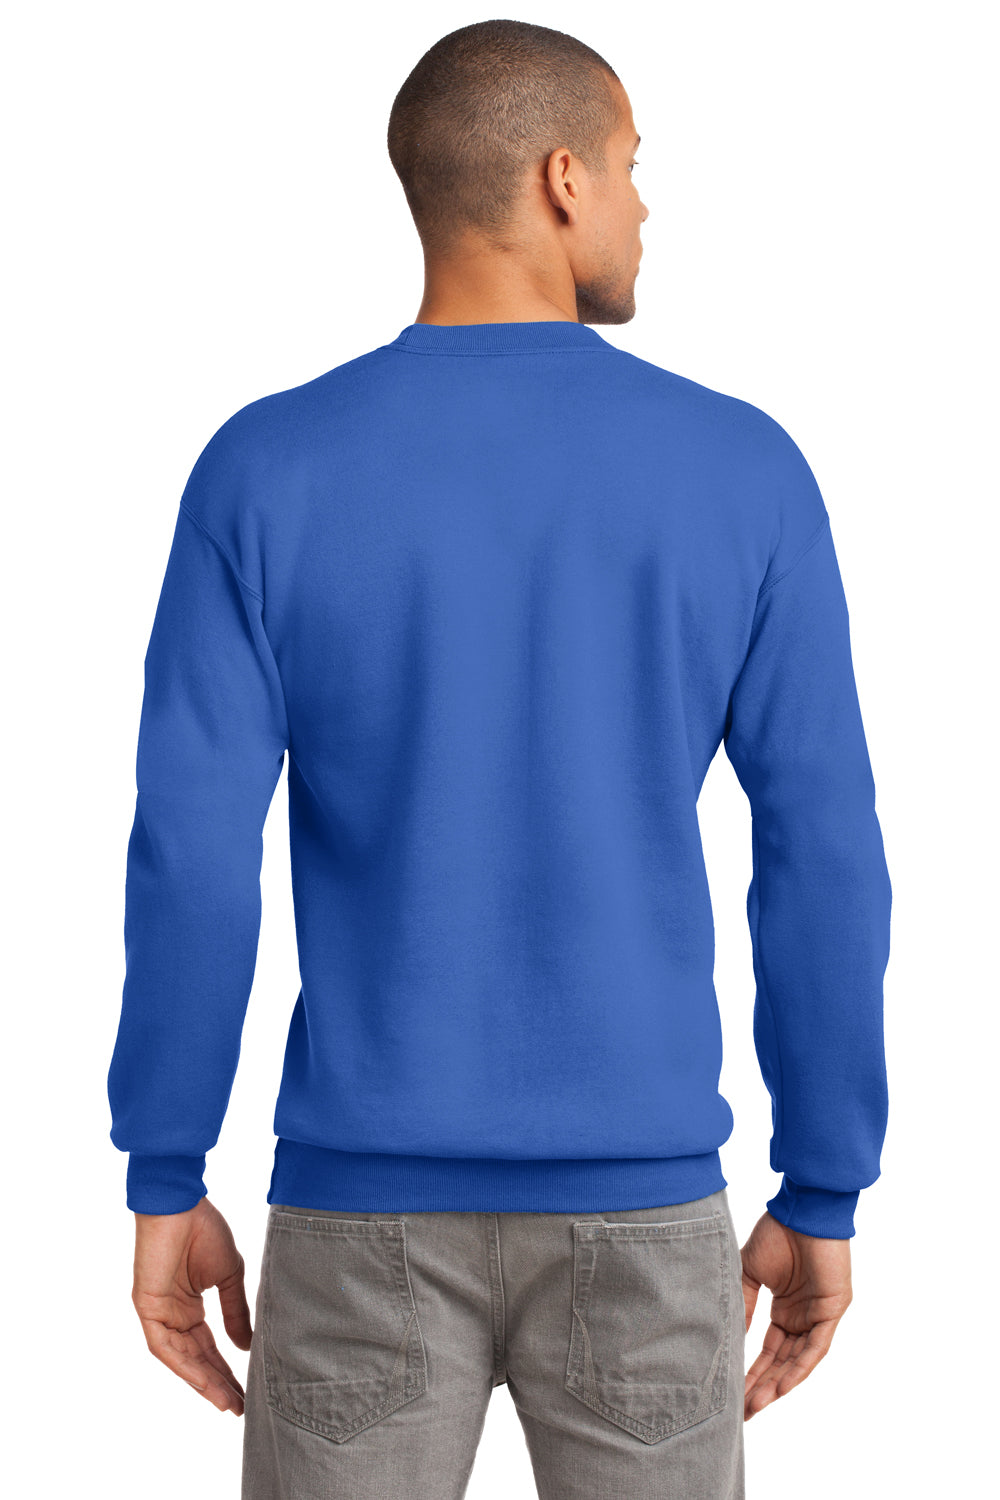 Port & Company PC90 Mens Essential Fleece Crewneck Sweatshirt Royal Blue Back